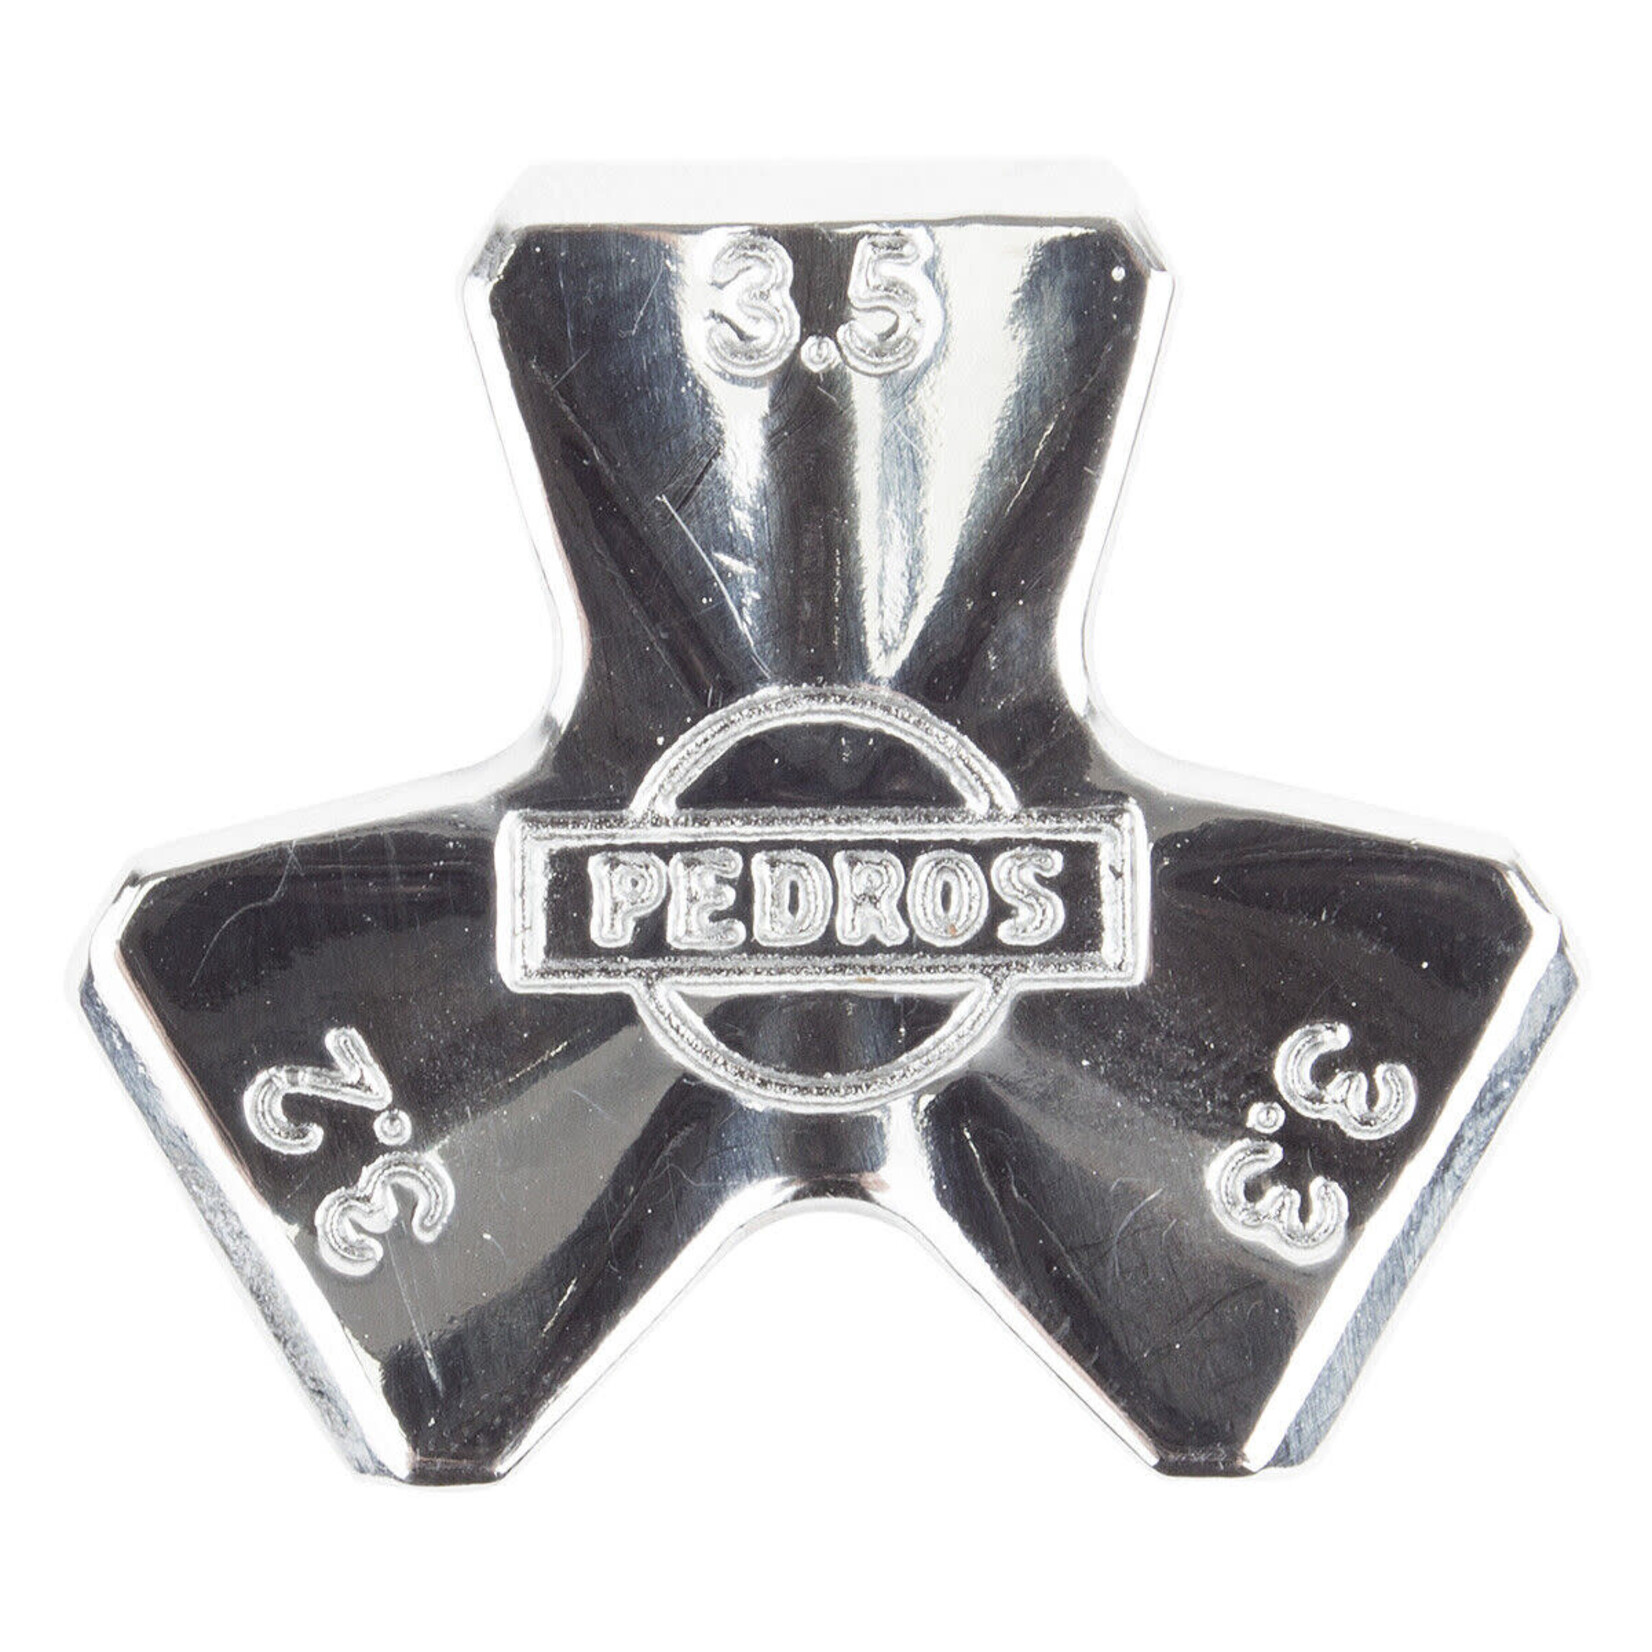 PEDRO'S Pedro's Multi spoke wrench